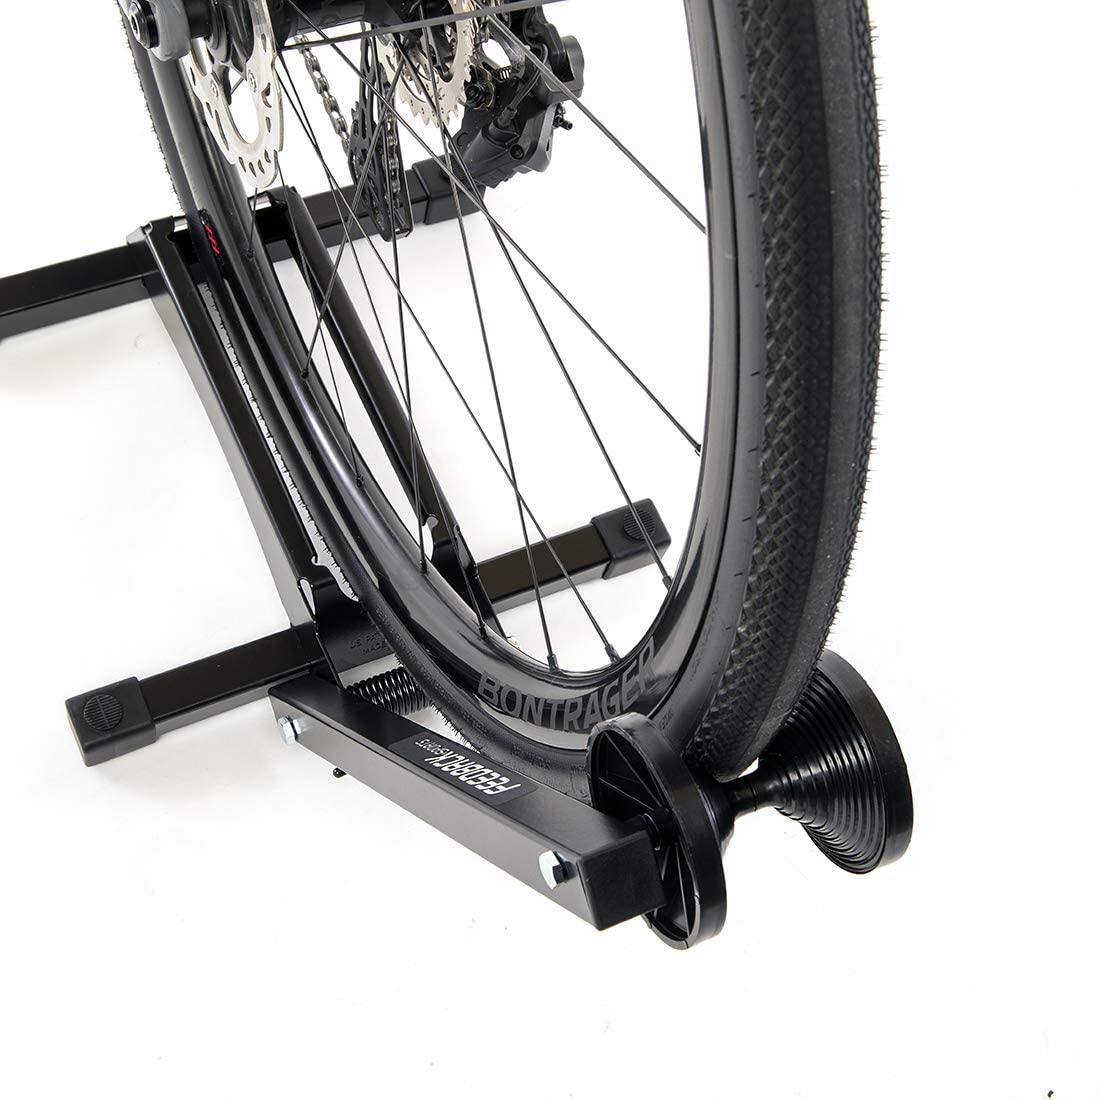  Feedback Rakk - Soporte para Rueda Trasera de Bicicleta 